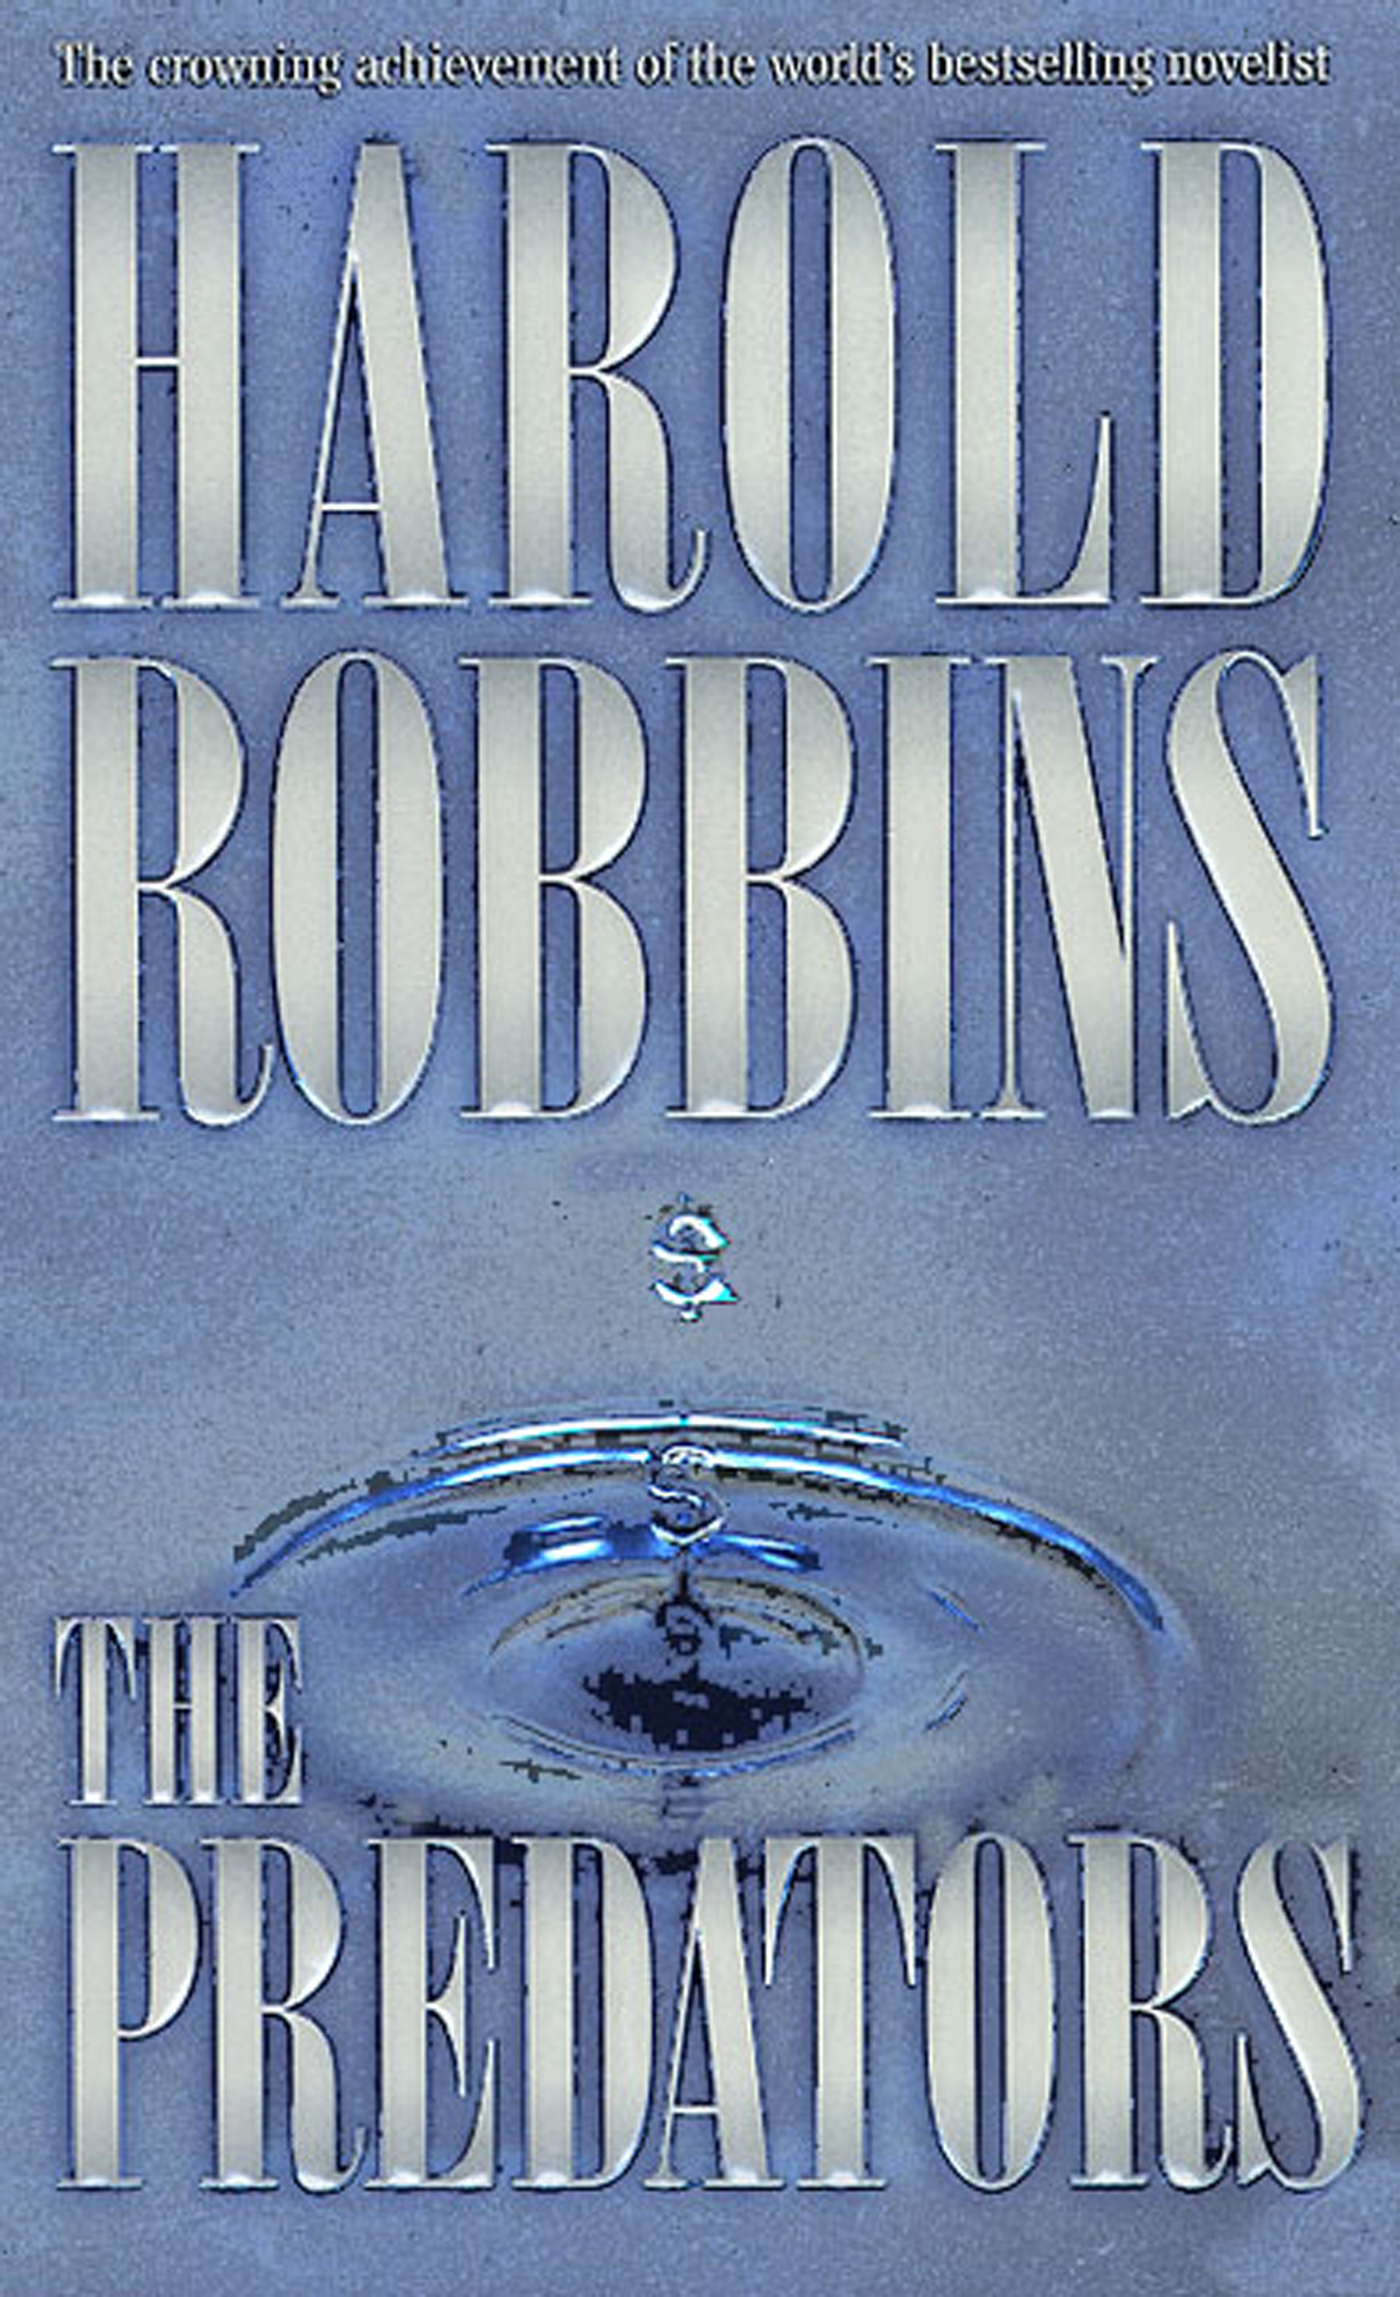 The Predators by Harold Robbins